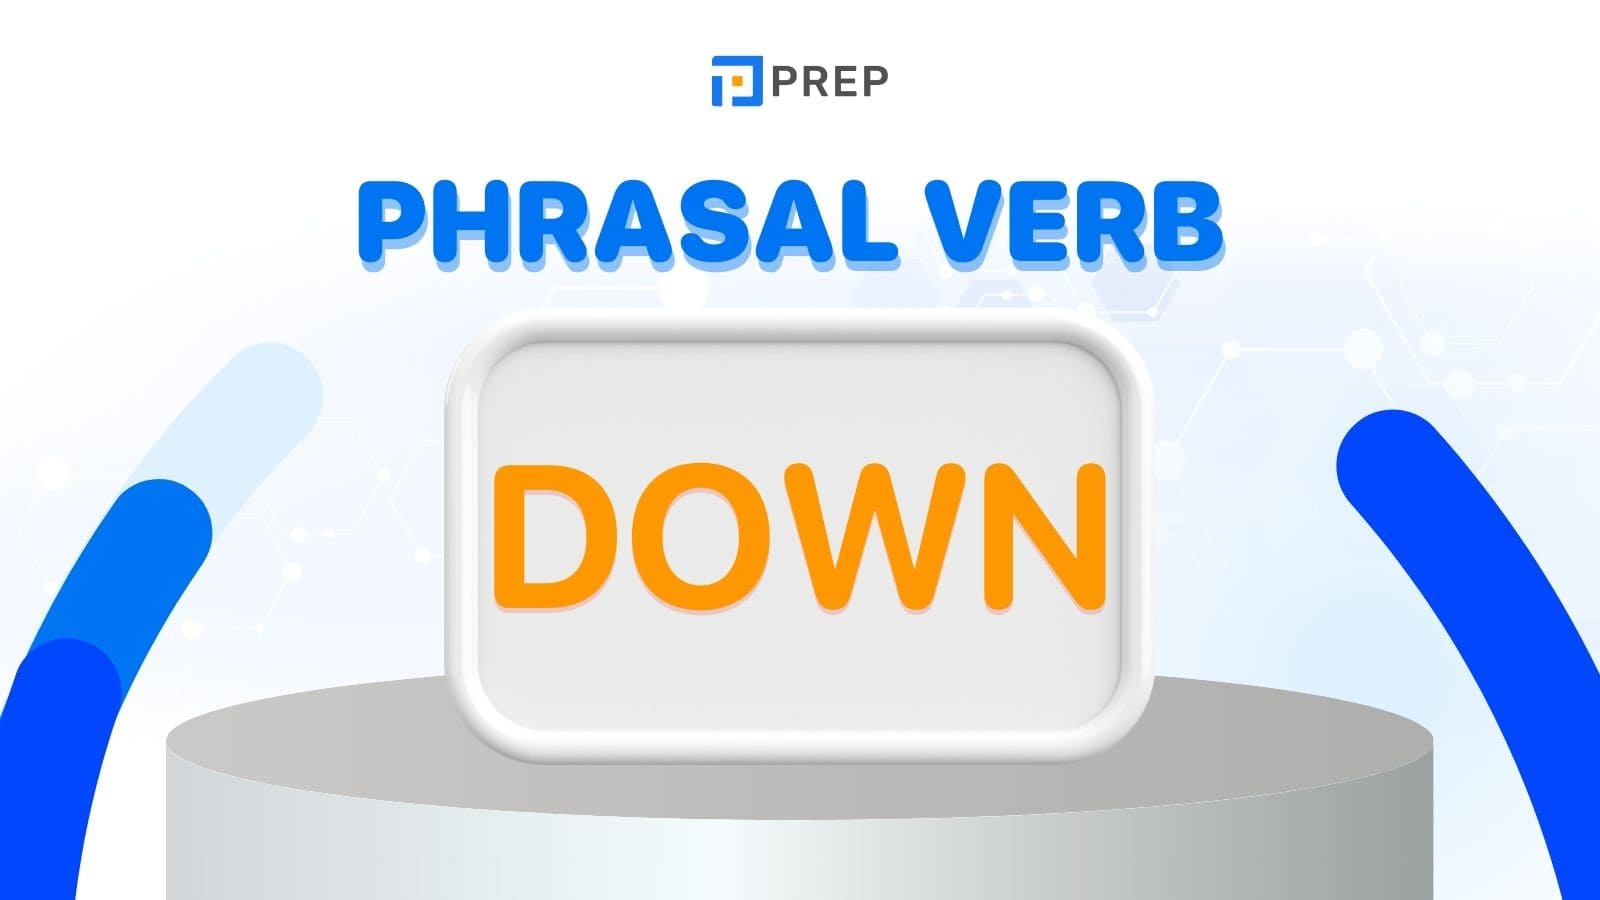 phrasal-verb-down.jpg